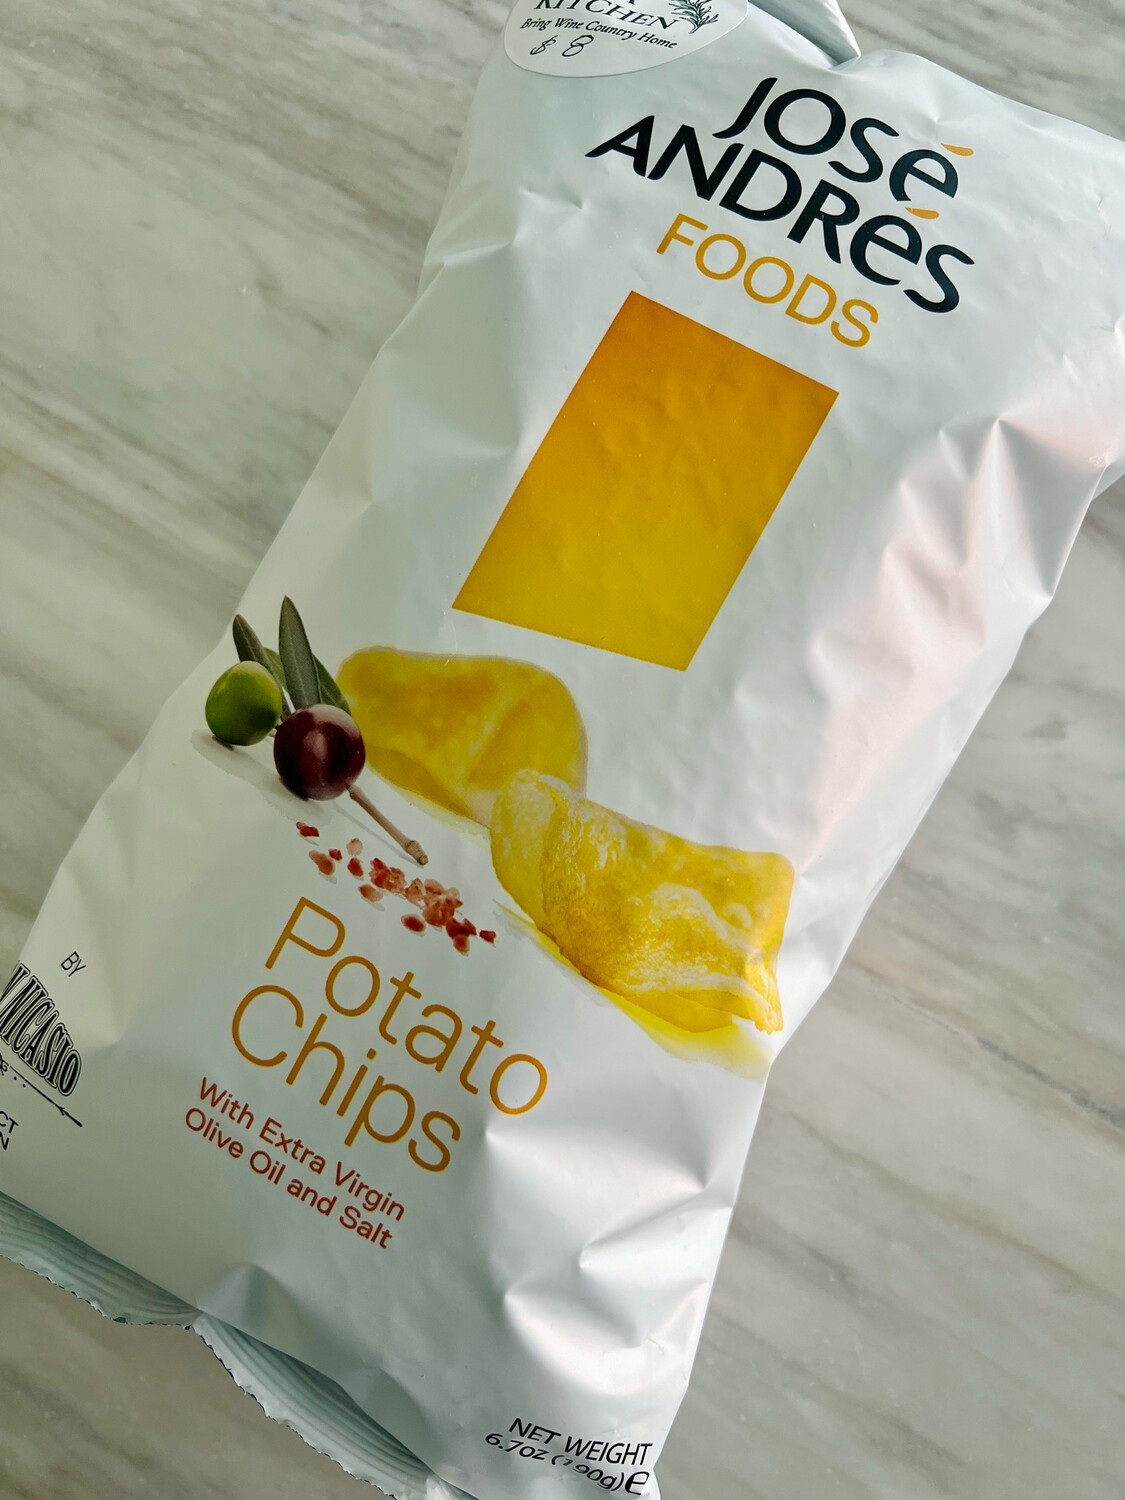 José Andrés Potato Chips Extra Virgin Olive Oil and Salt 6.7ox